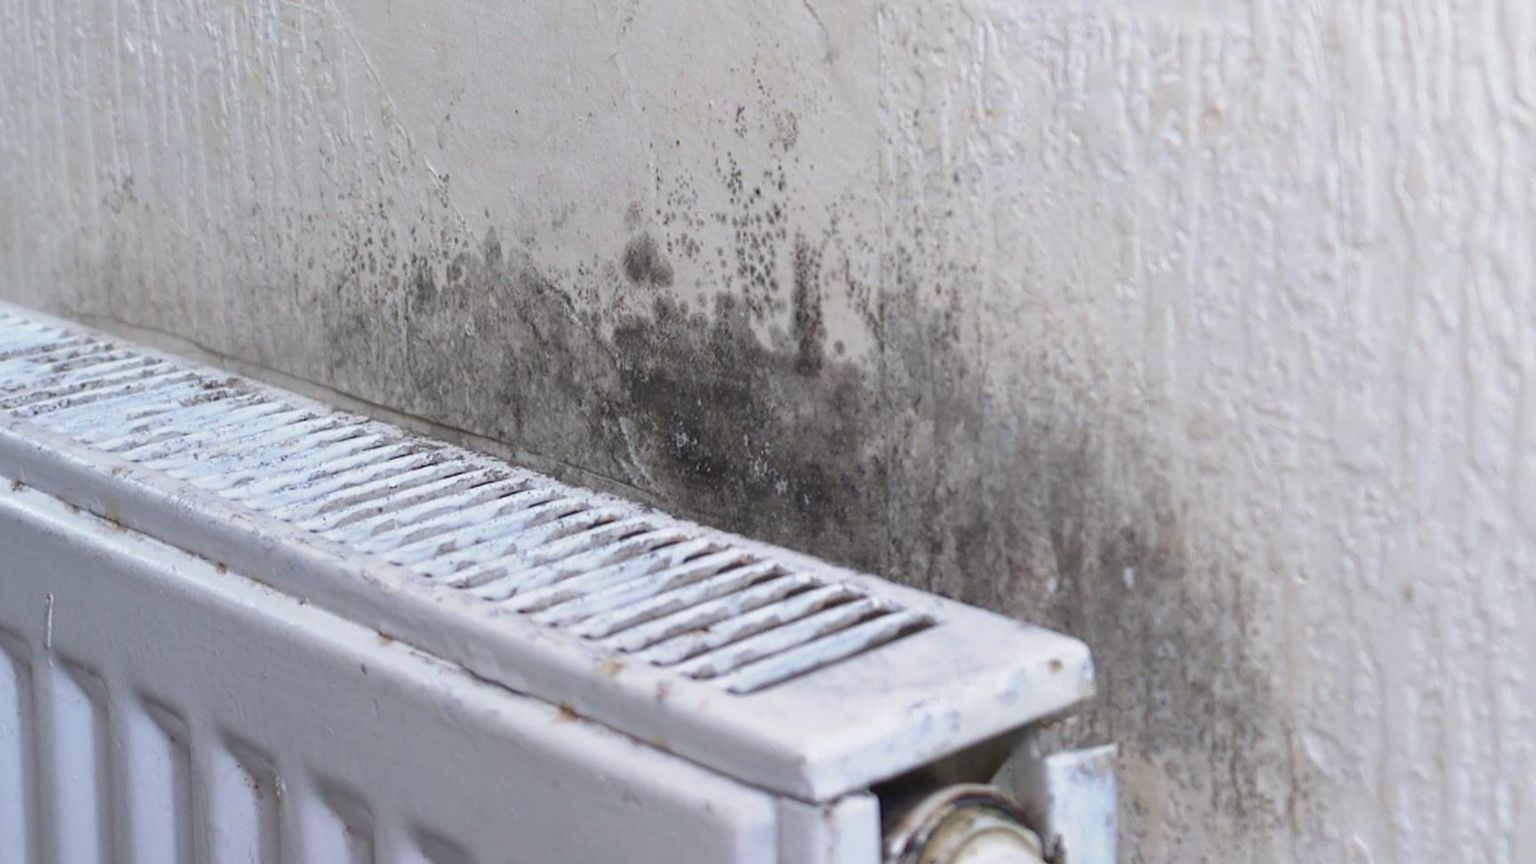 Damp behind a radiator